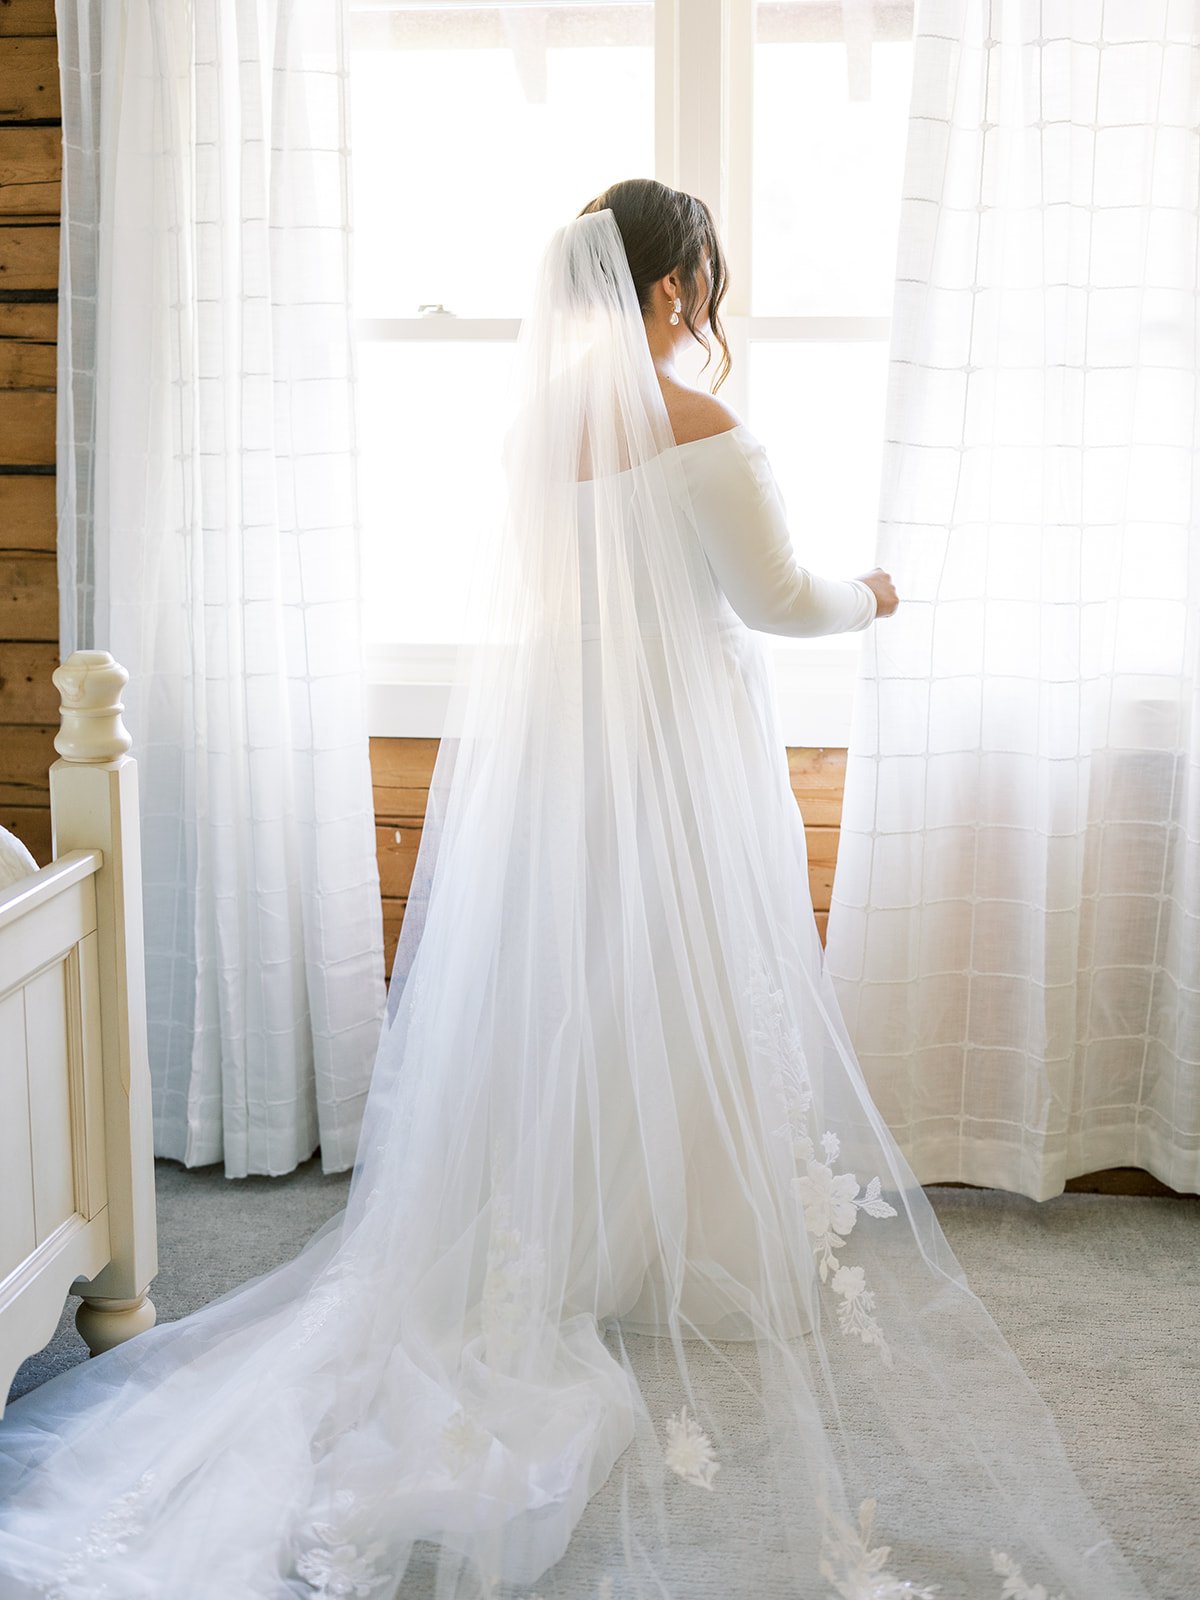 Bride standing by window in cabin